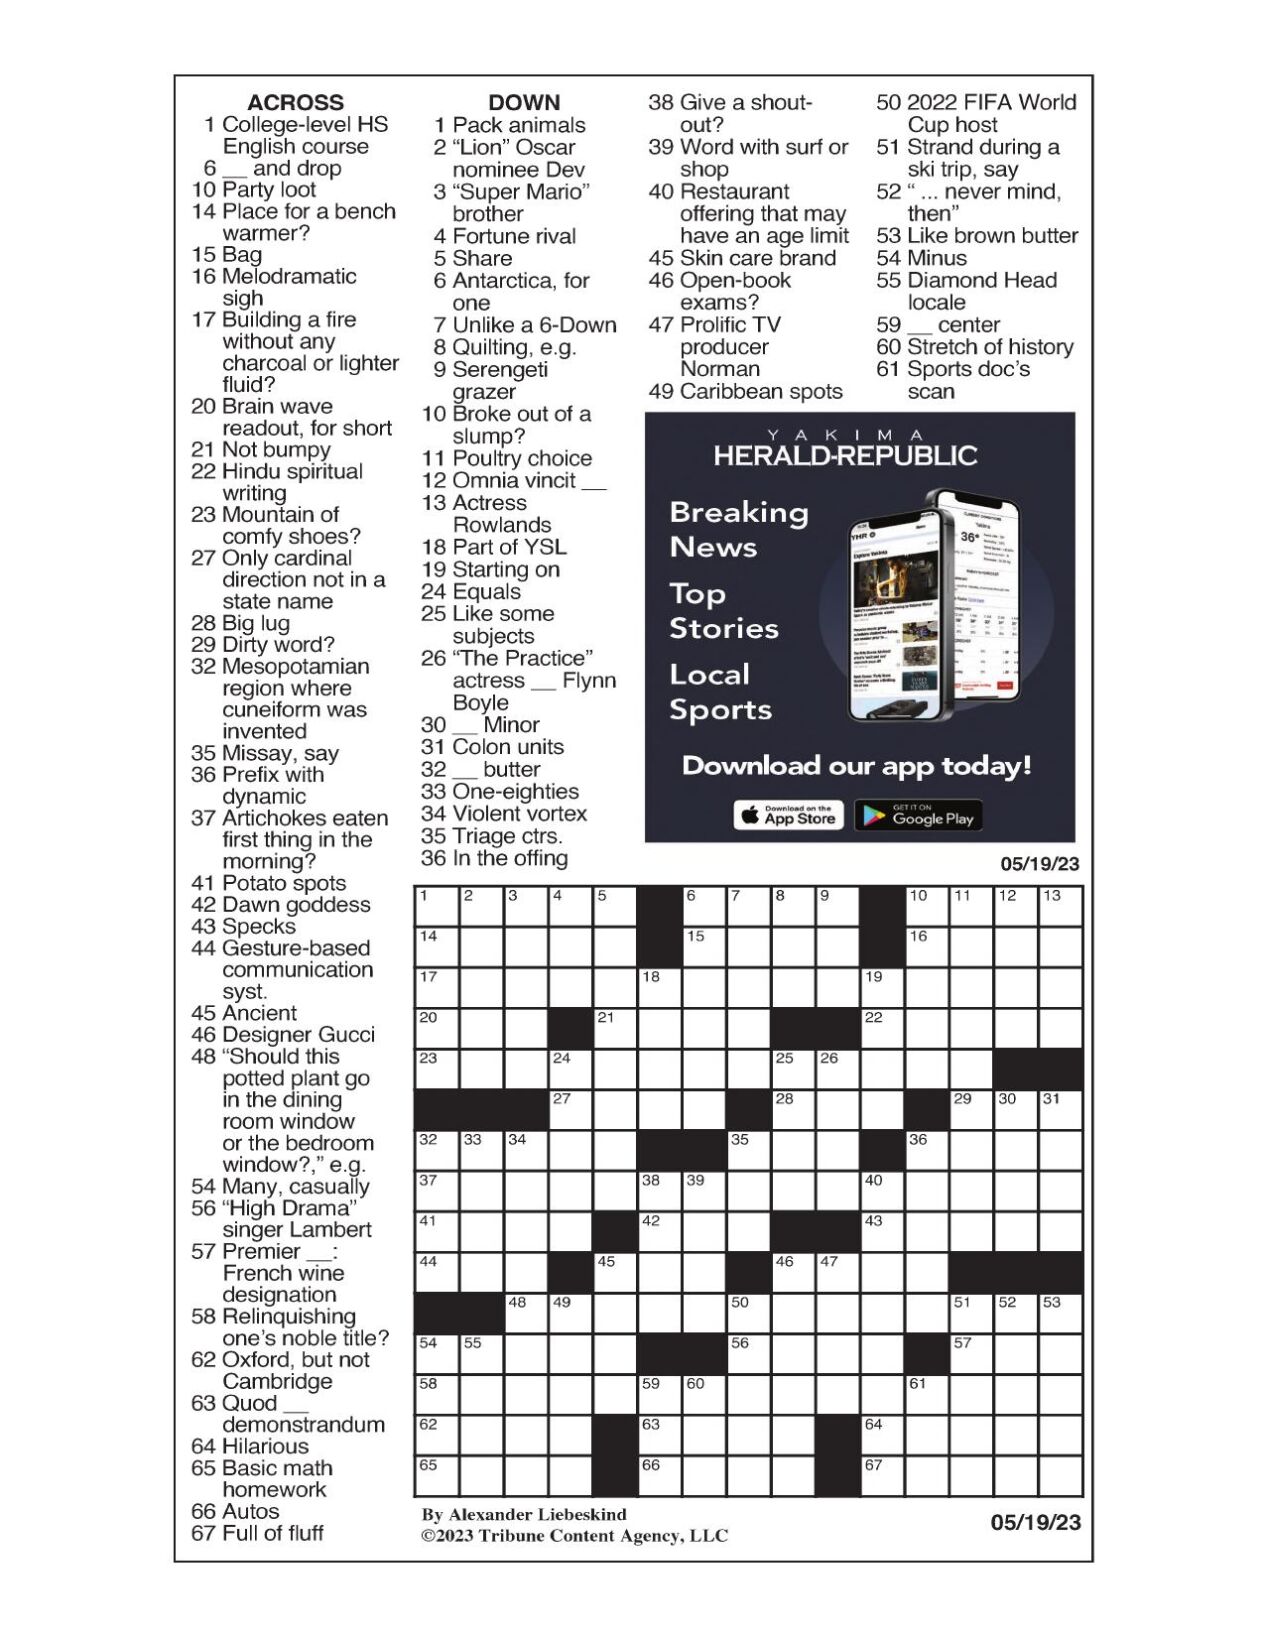 LA Times Crossword 24 Nov 19, Sunday 